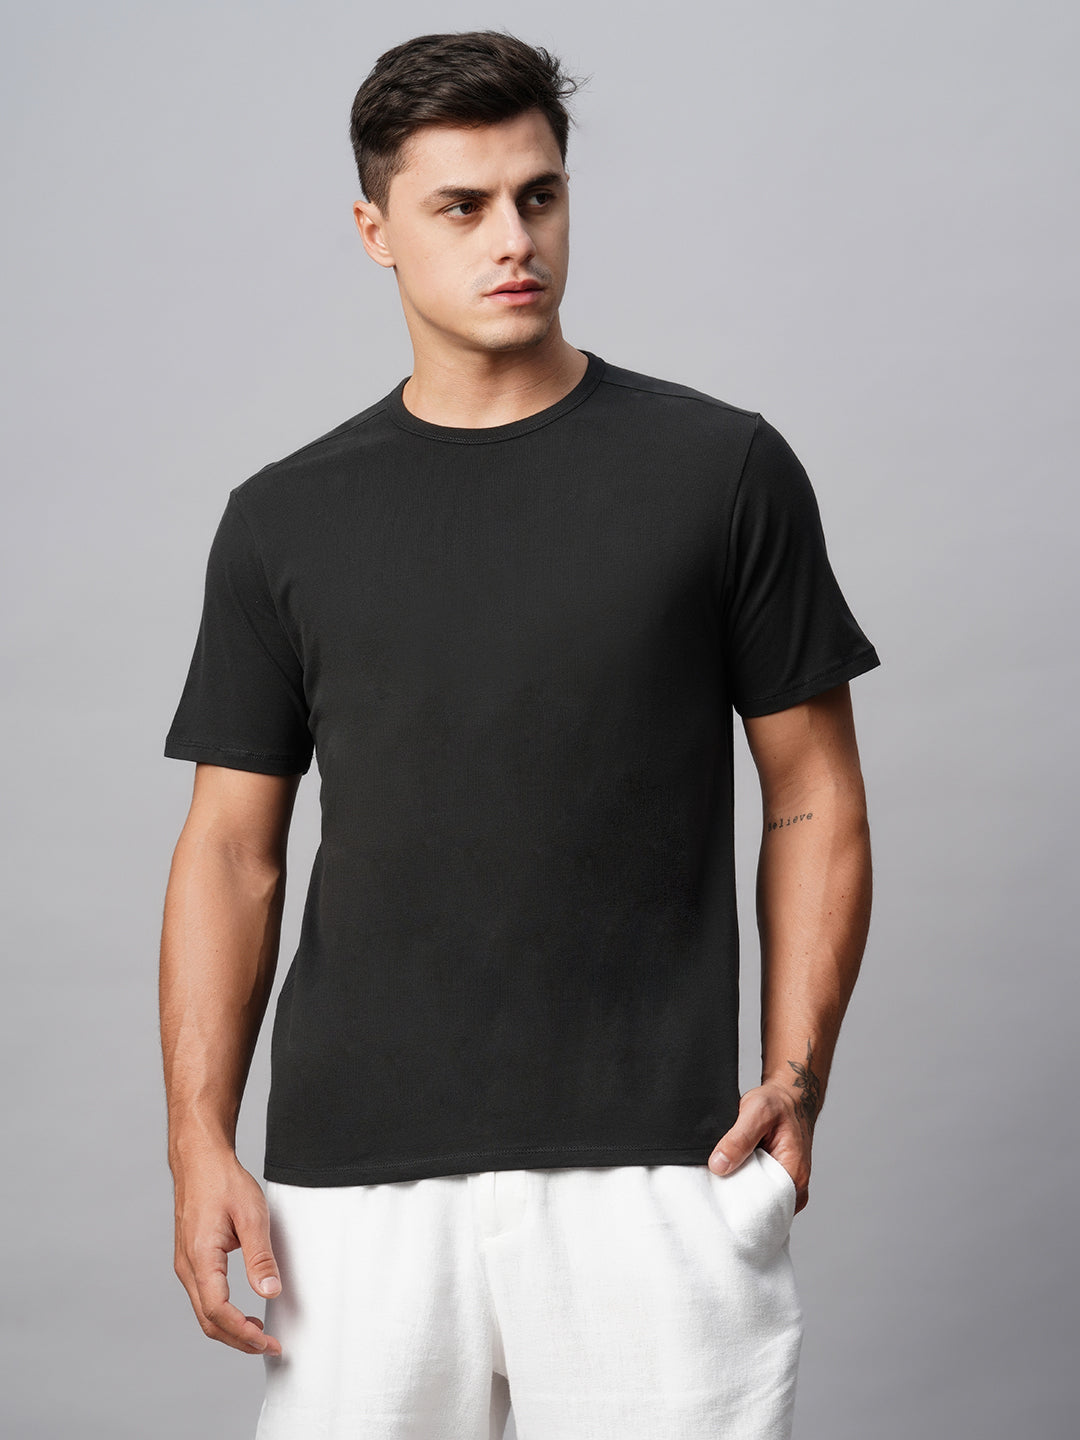 Men's Cotton Grey Regular Fit Tshirt